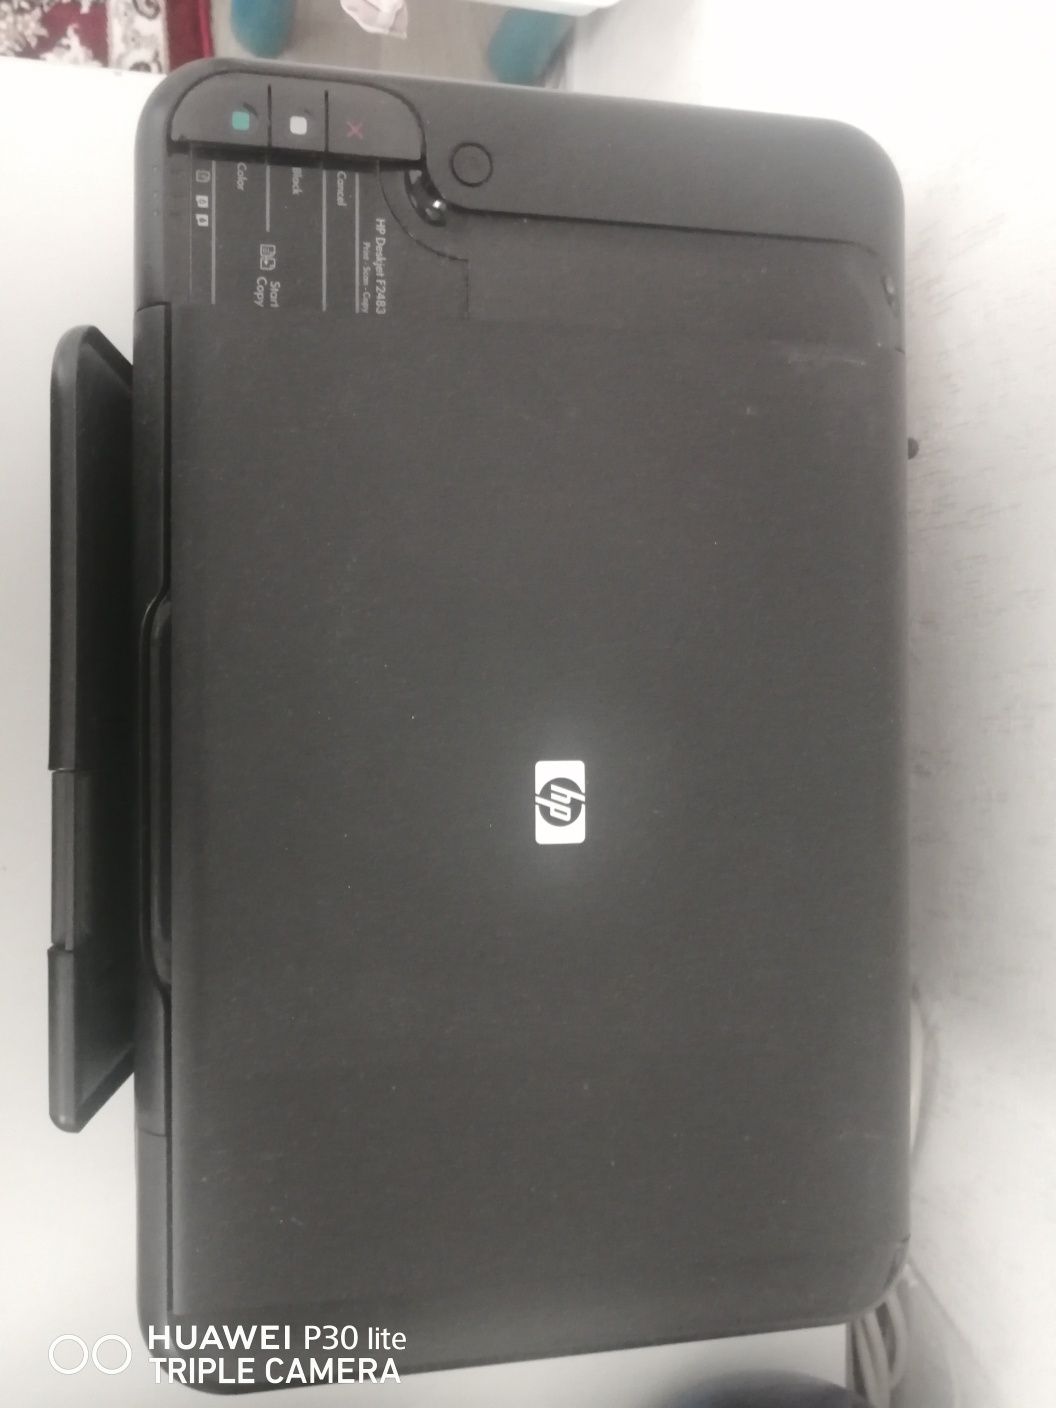 Принтер сканер ксерокс HP 2483